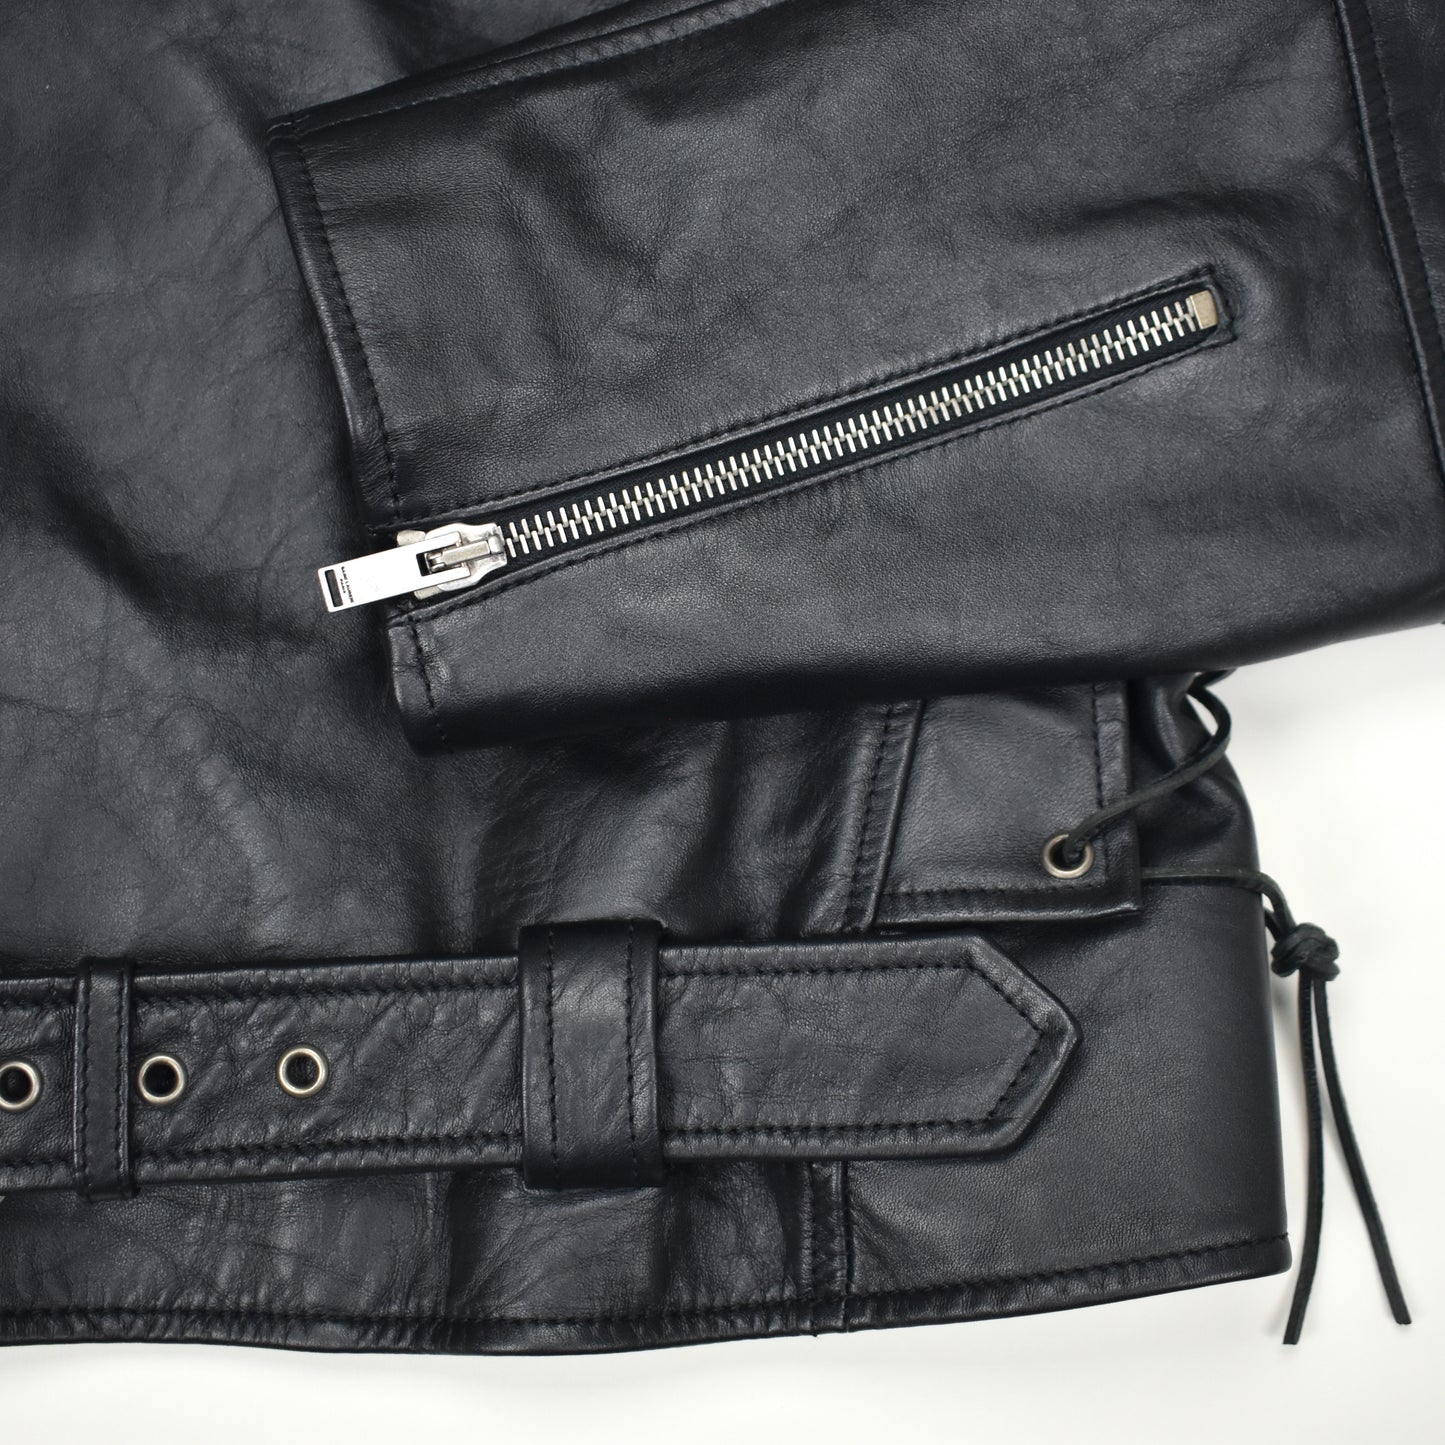 Saint Laurent - Black Studded Leather Biker Jacket